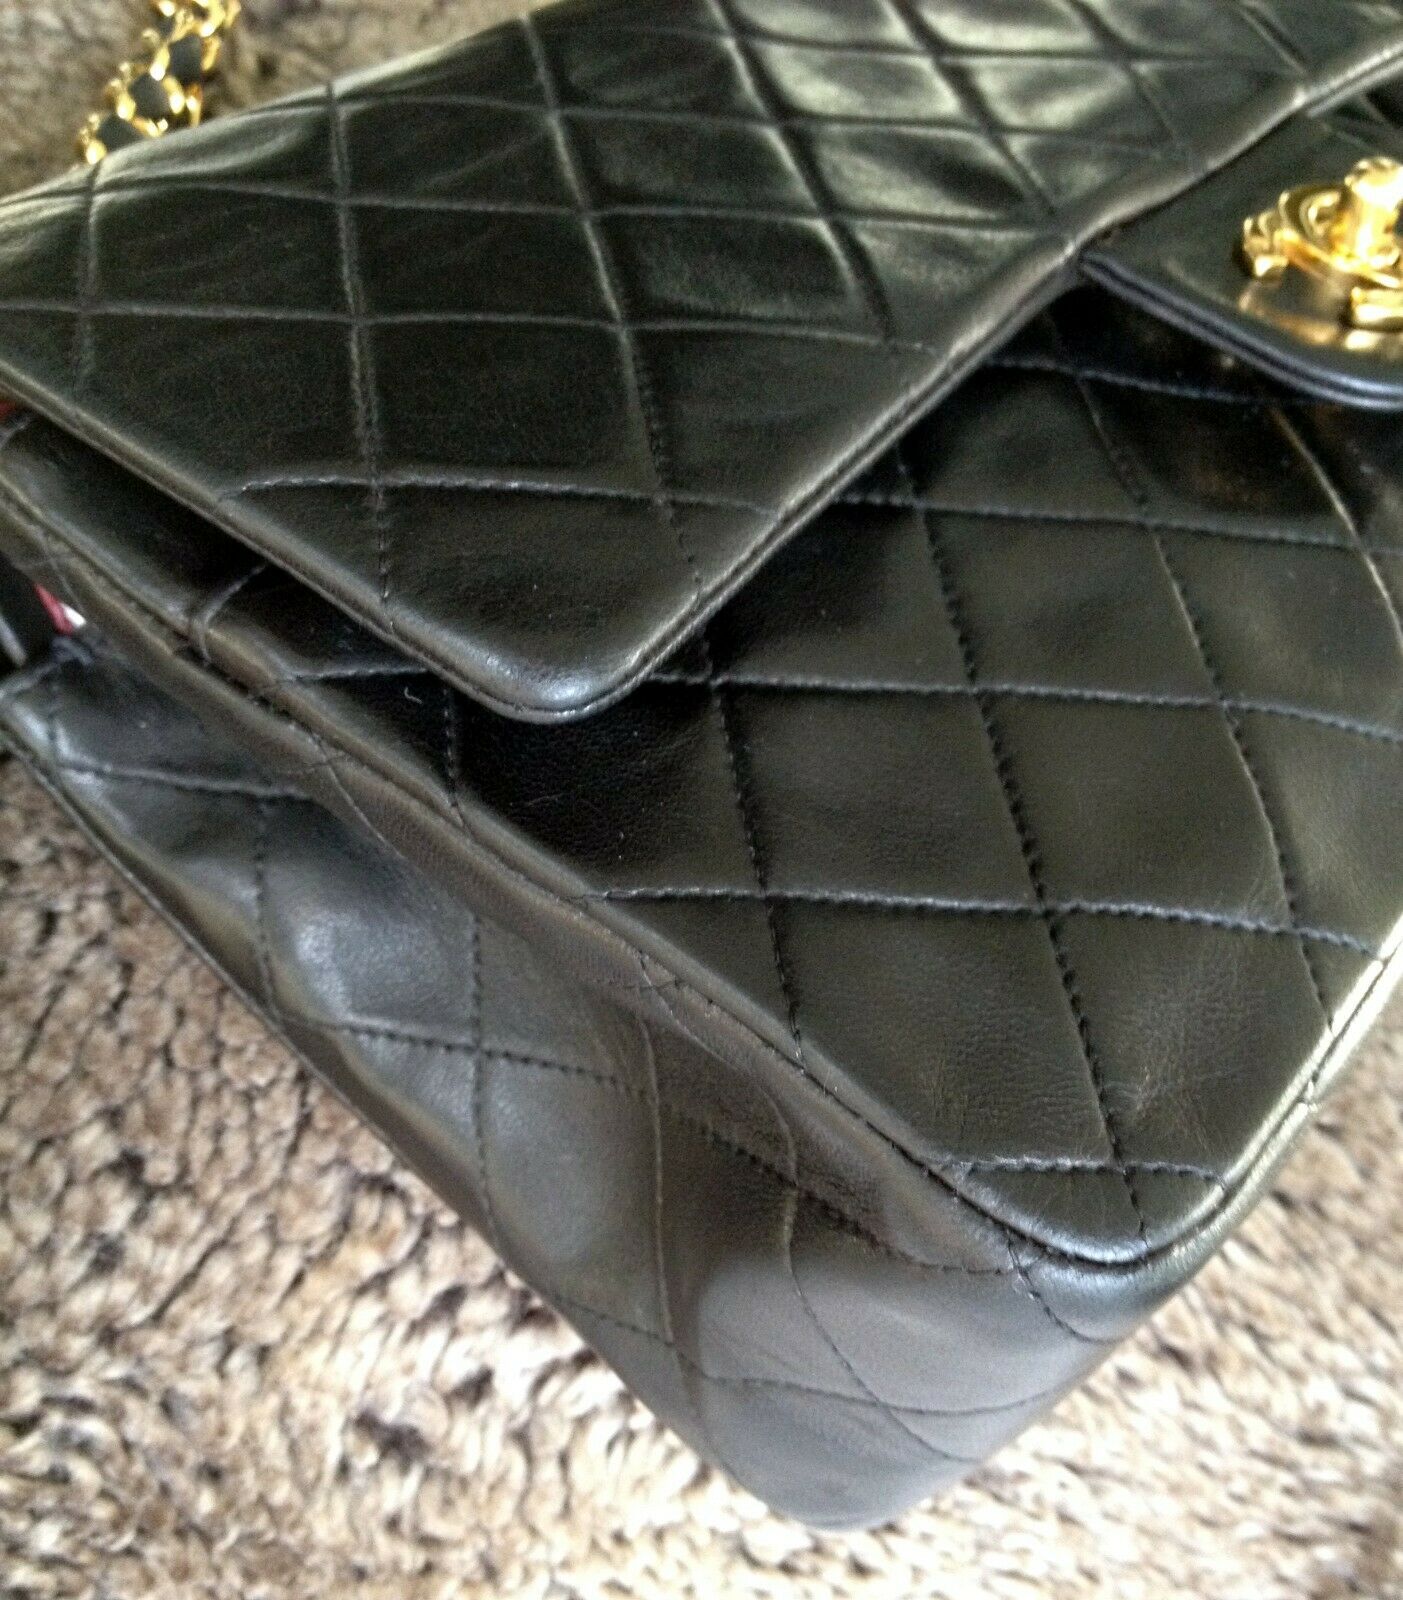 Pristine Chanel 2006 Vintage Black Medium Classic Flap Bag 24k GHW